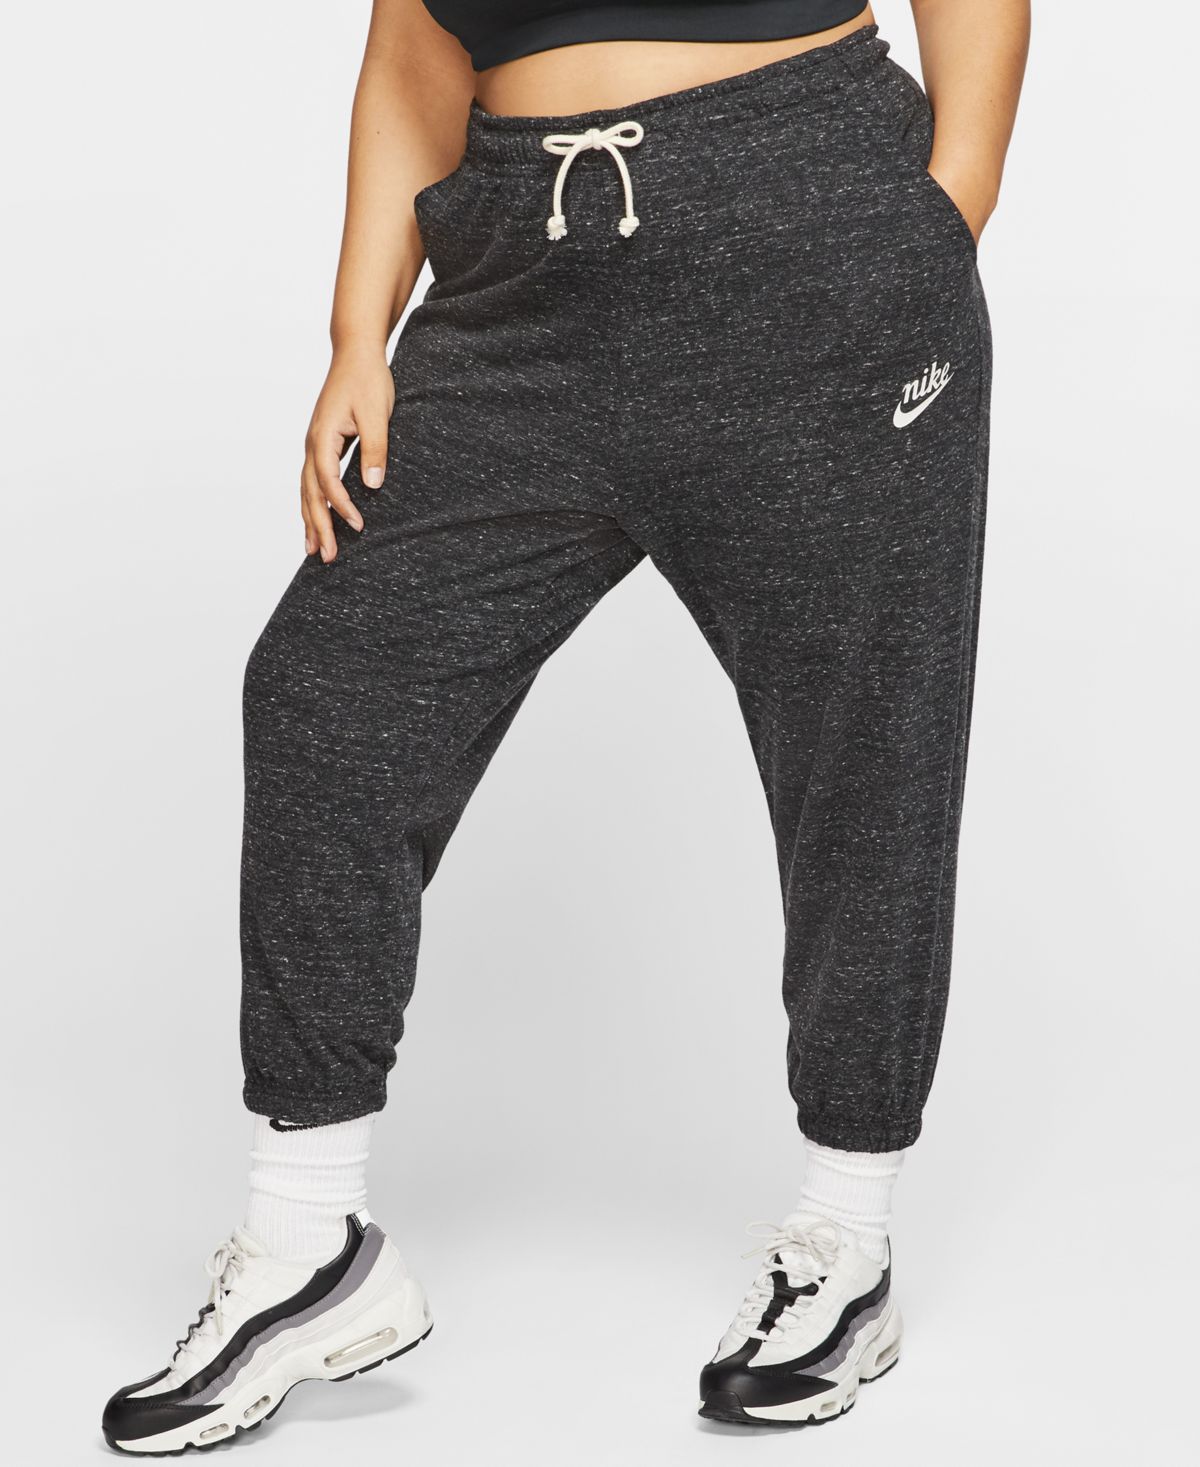 Nike Womens Plus Size Capri Pants | eBay